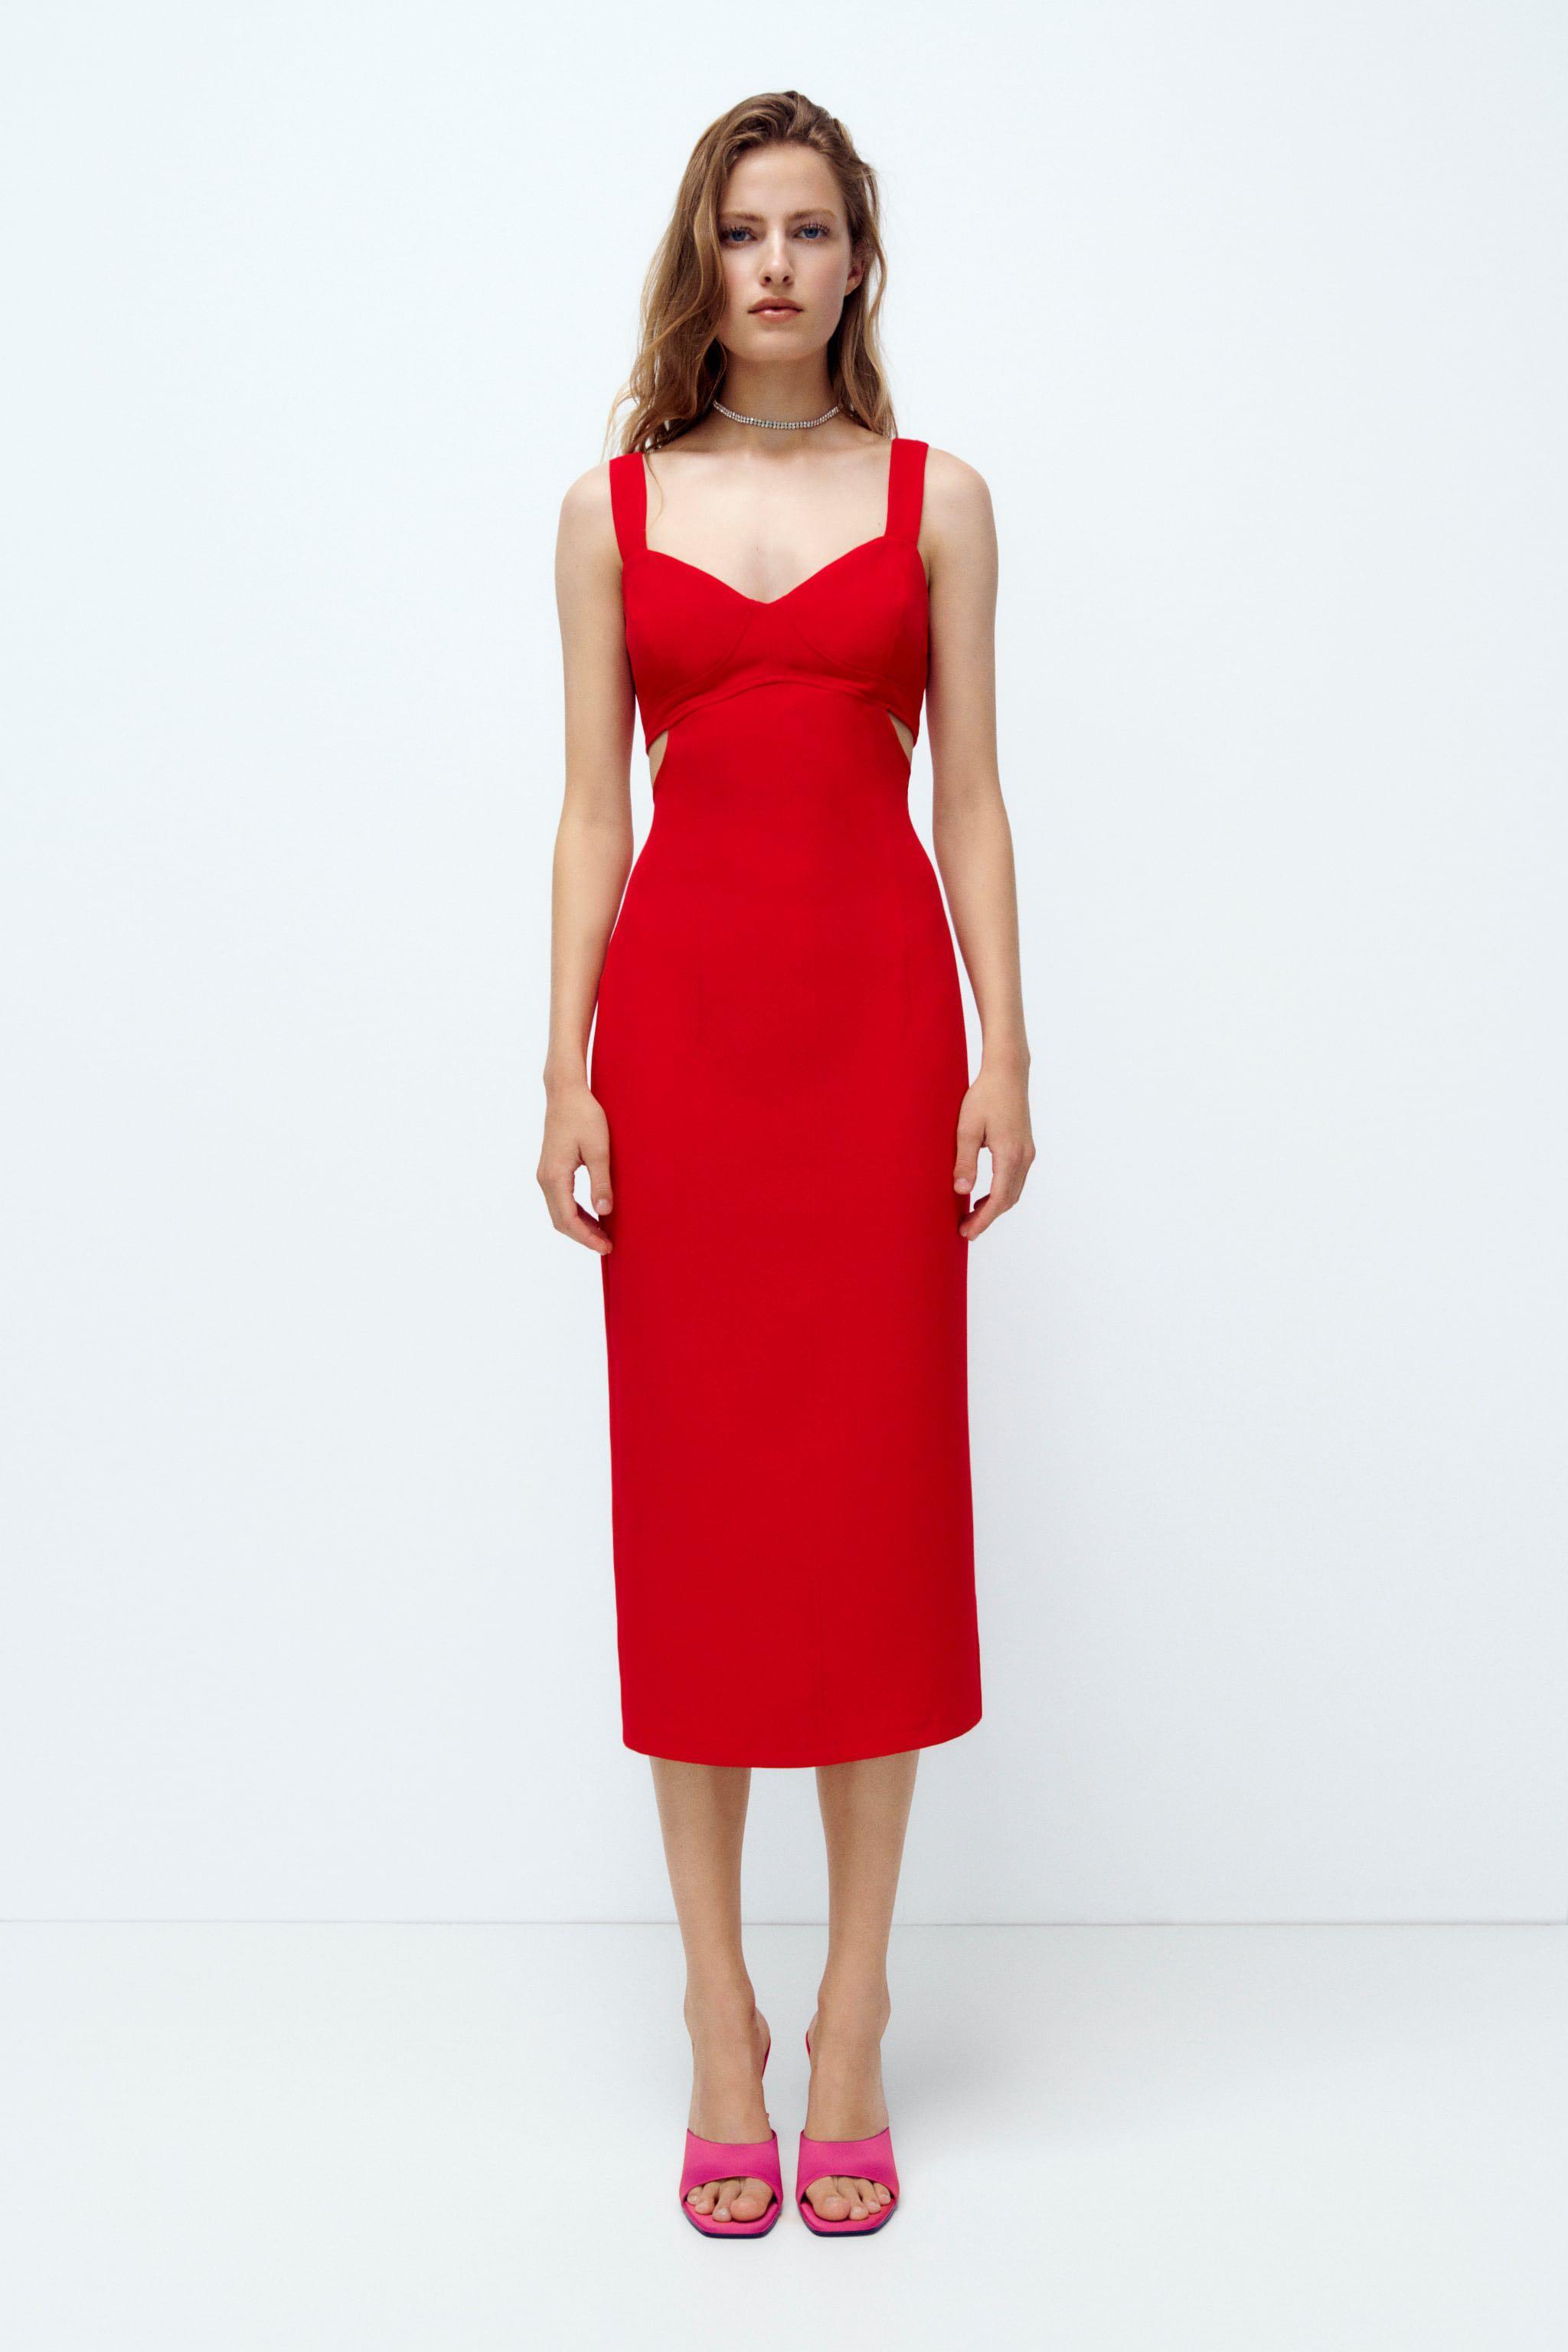 zara cut out dress red, Women's Fashion ...